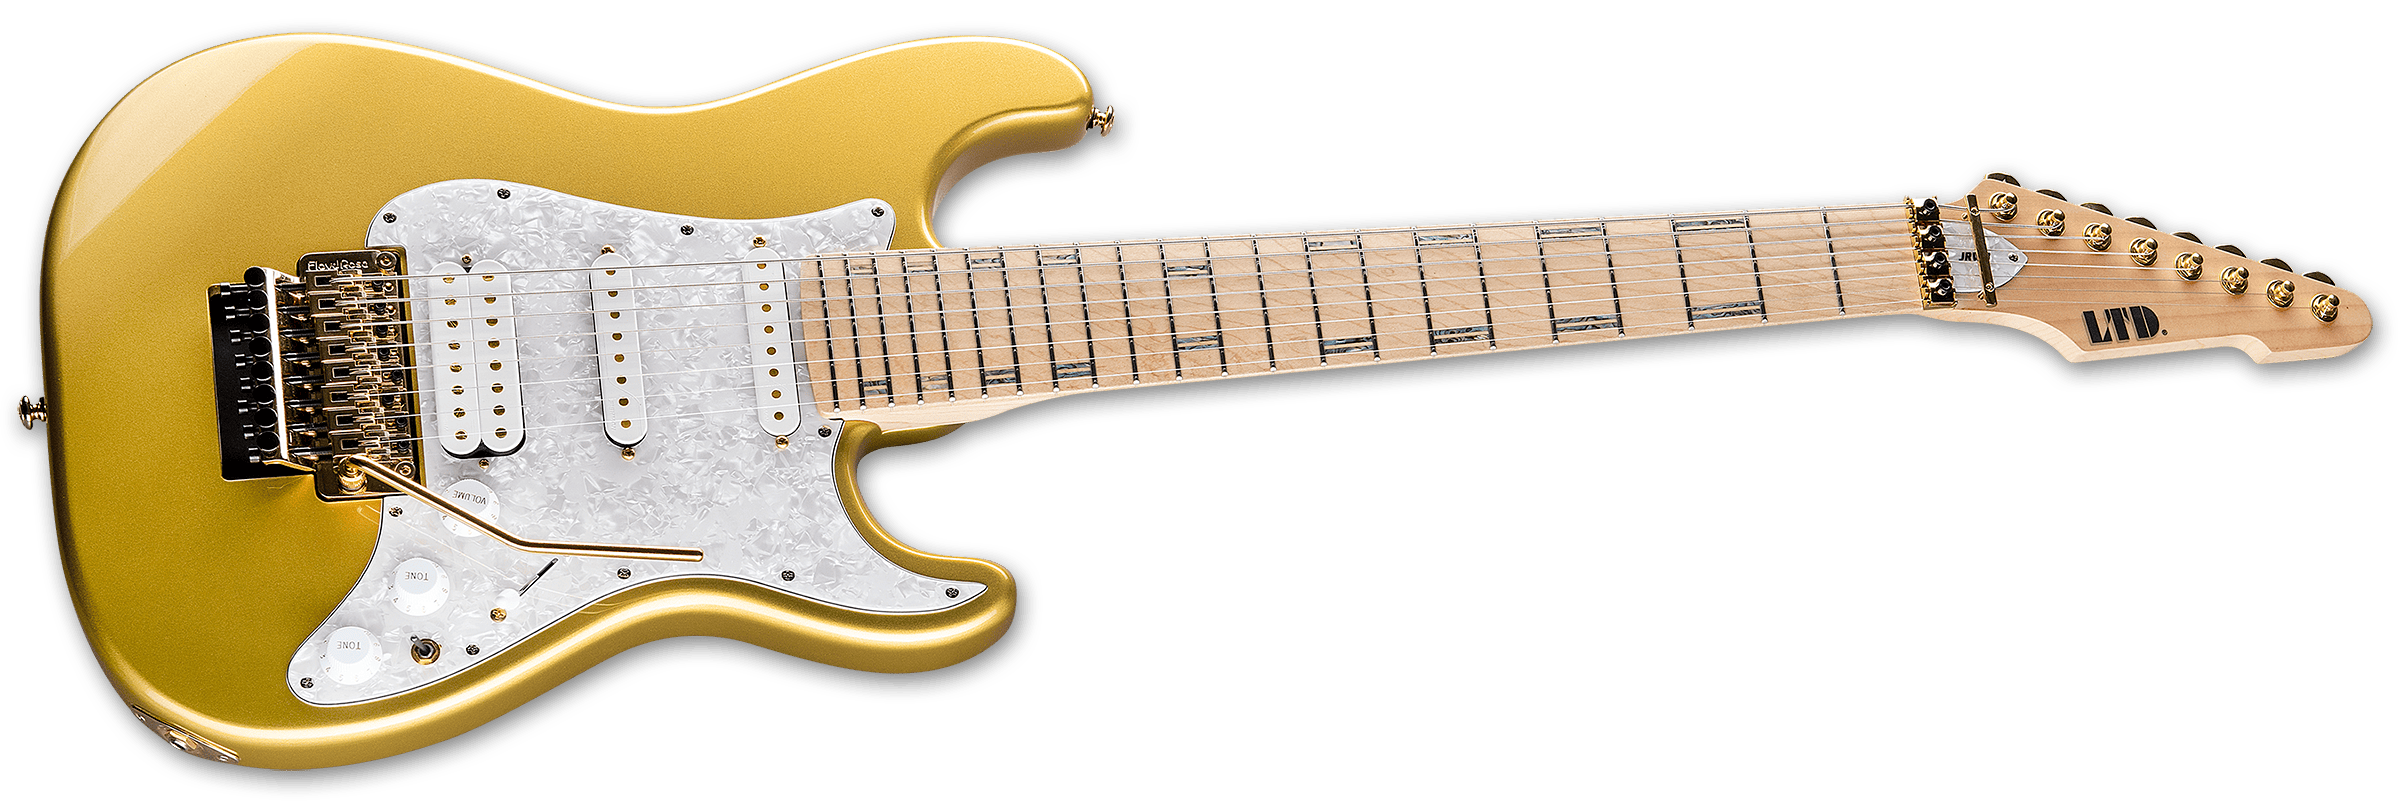 Ltd Jrv8 8-cordes Hss Trem Mn - Metallic Gold - Guitarra eléctrica de 7 cuerdas - Variation 2